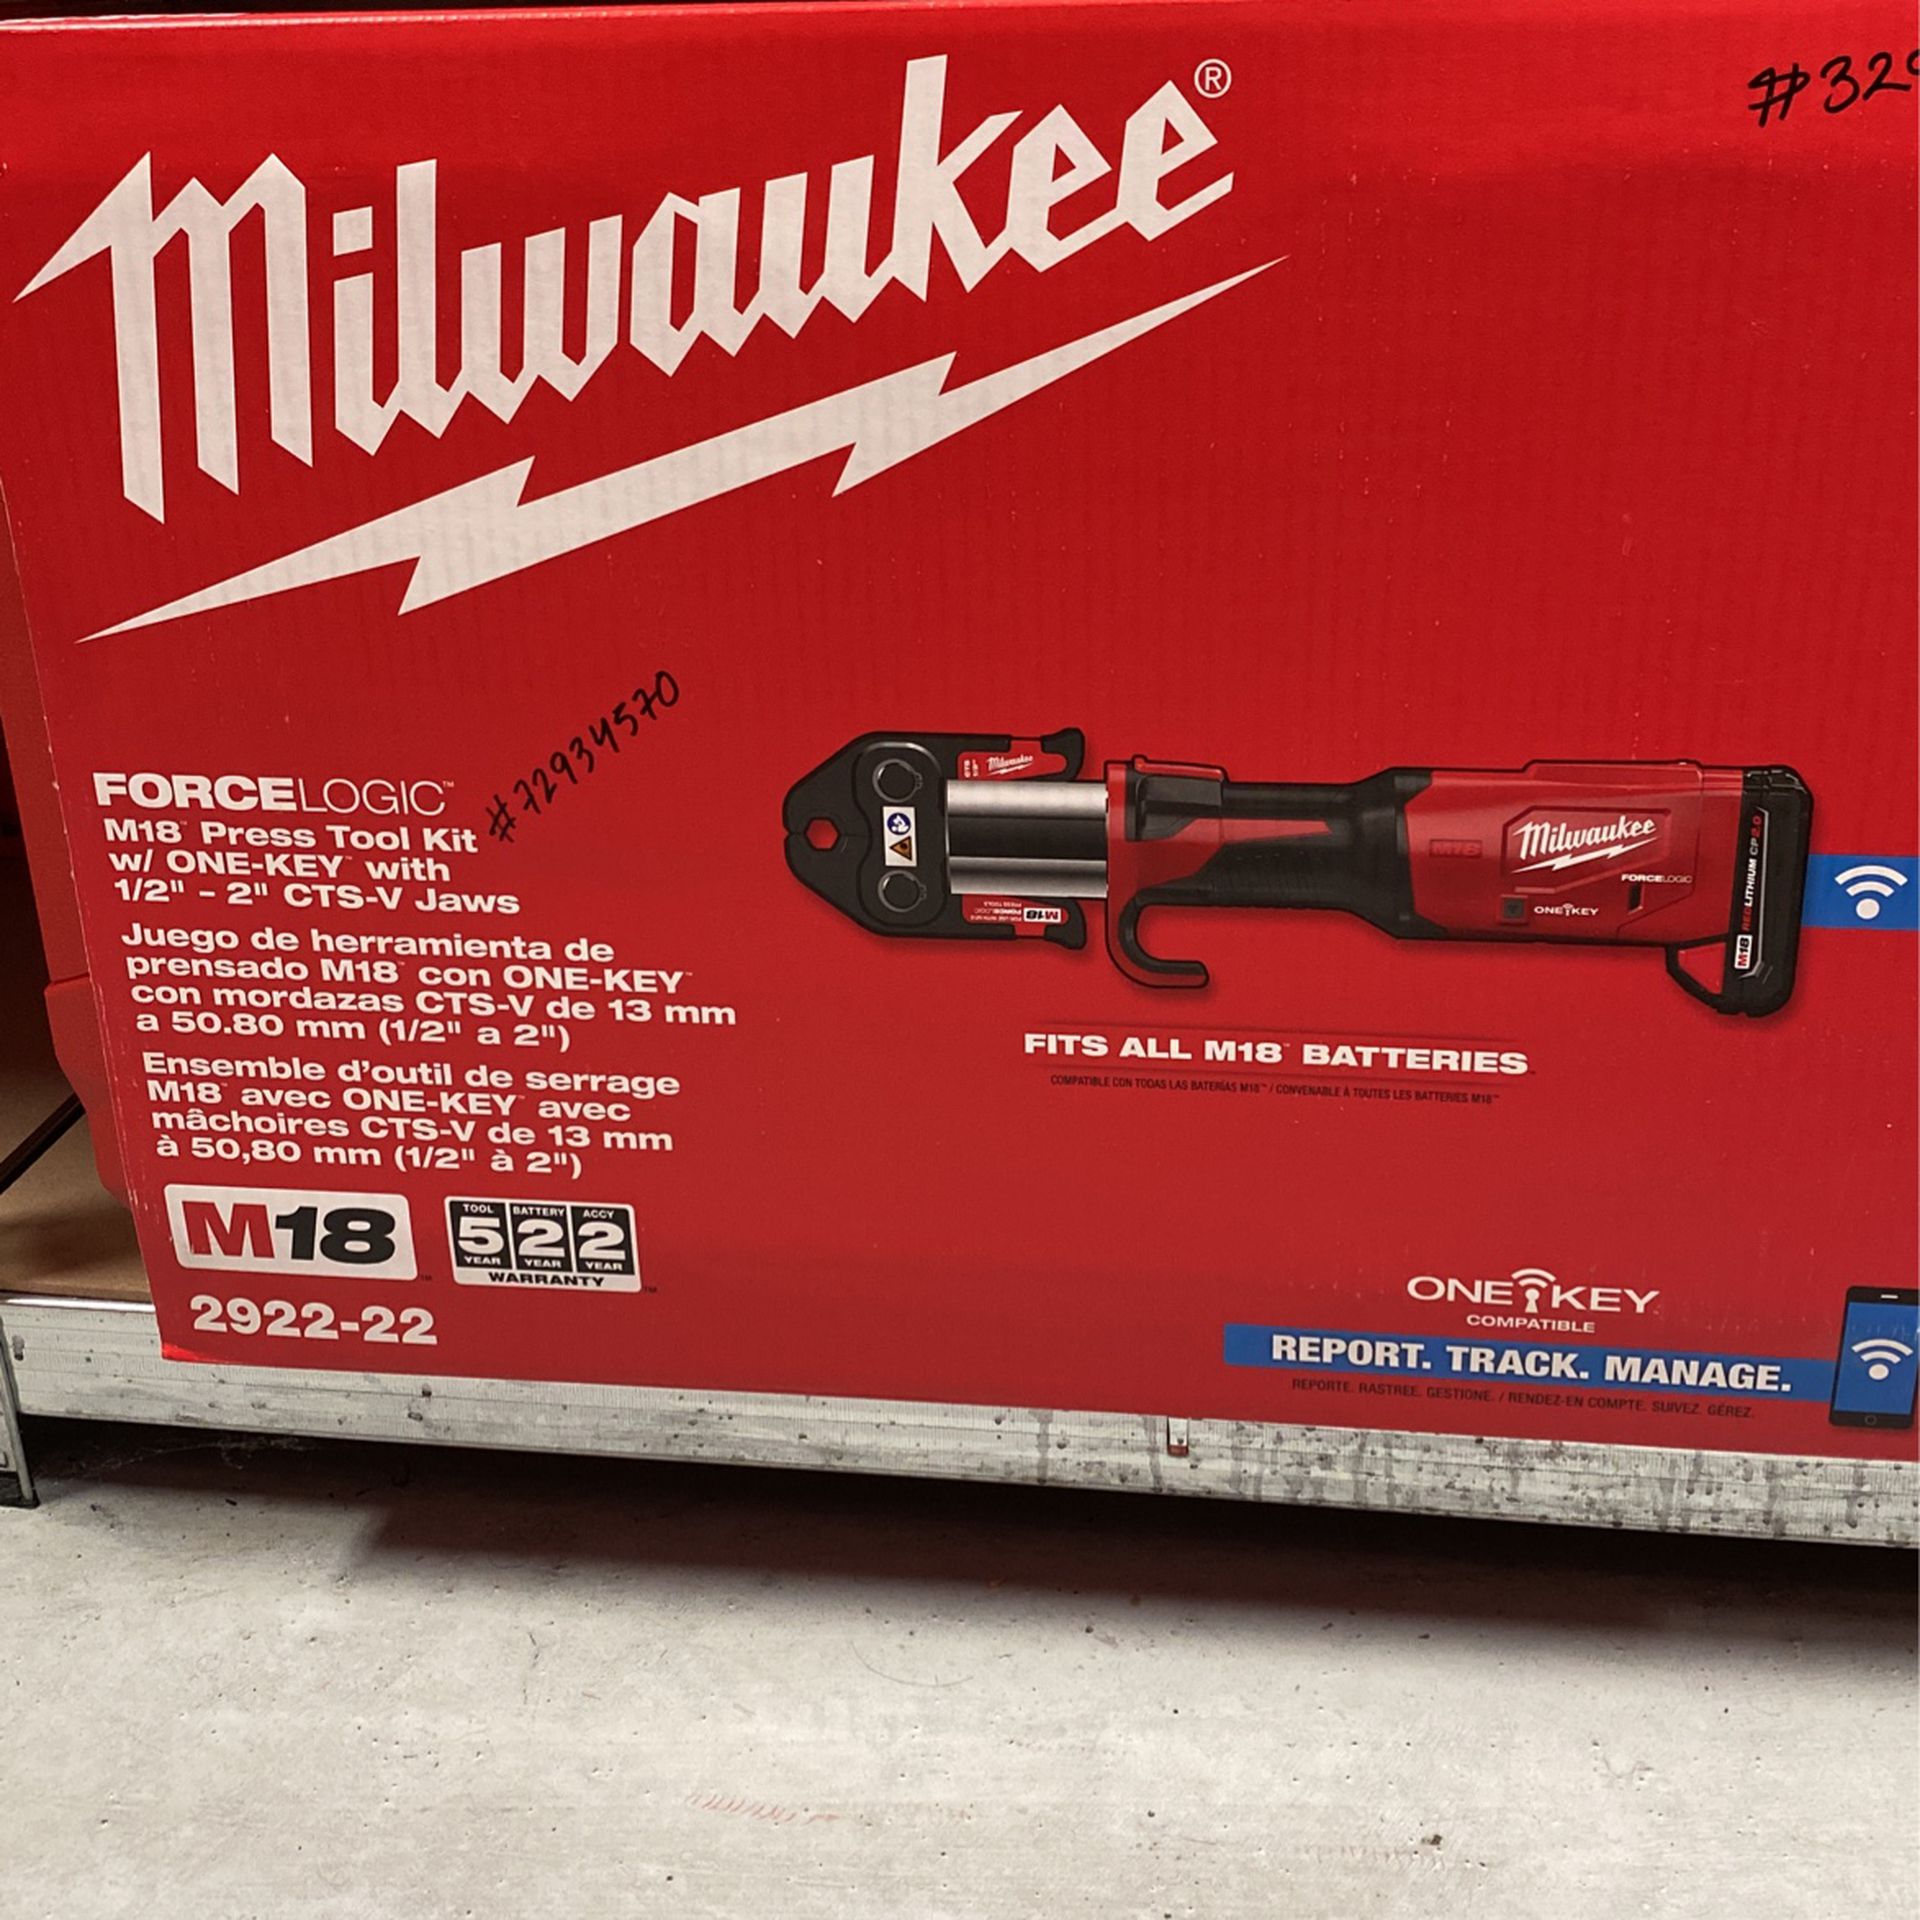 Milwaukee M18 Forge Logic Press Tool Kit 1/2”-2” 